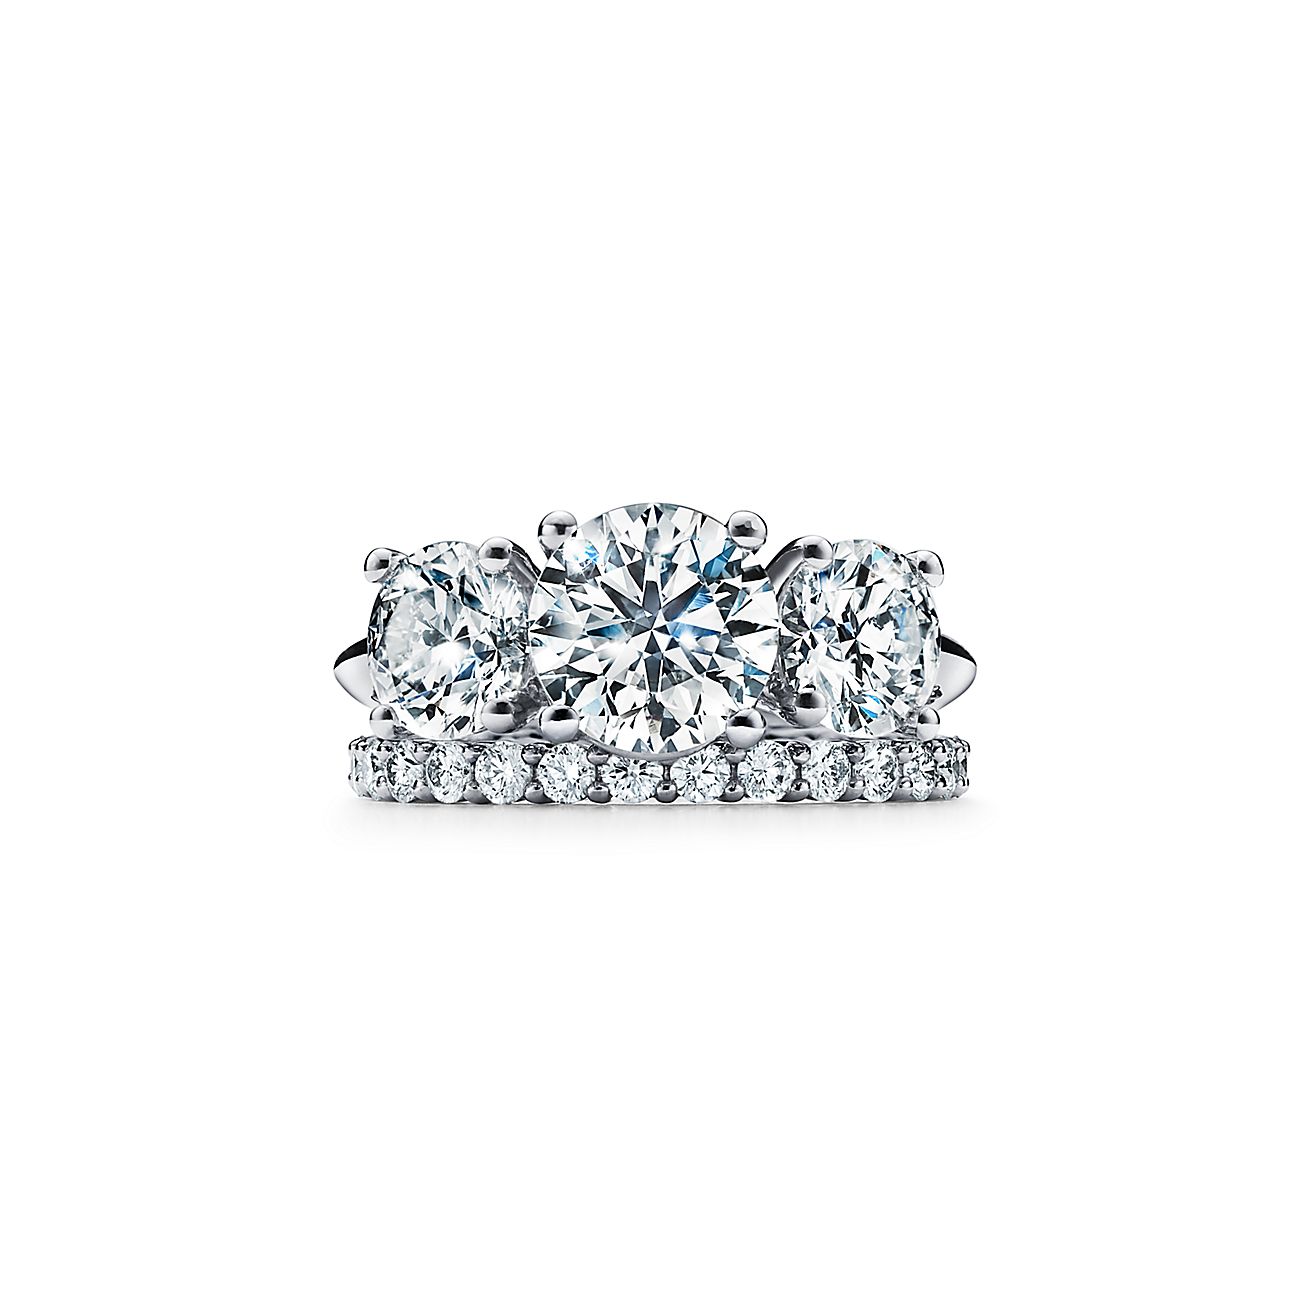 Tiffany & Co. Diamond Engagement Ring in Platinum G VVS1 1.1 CTW